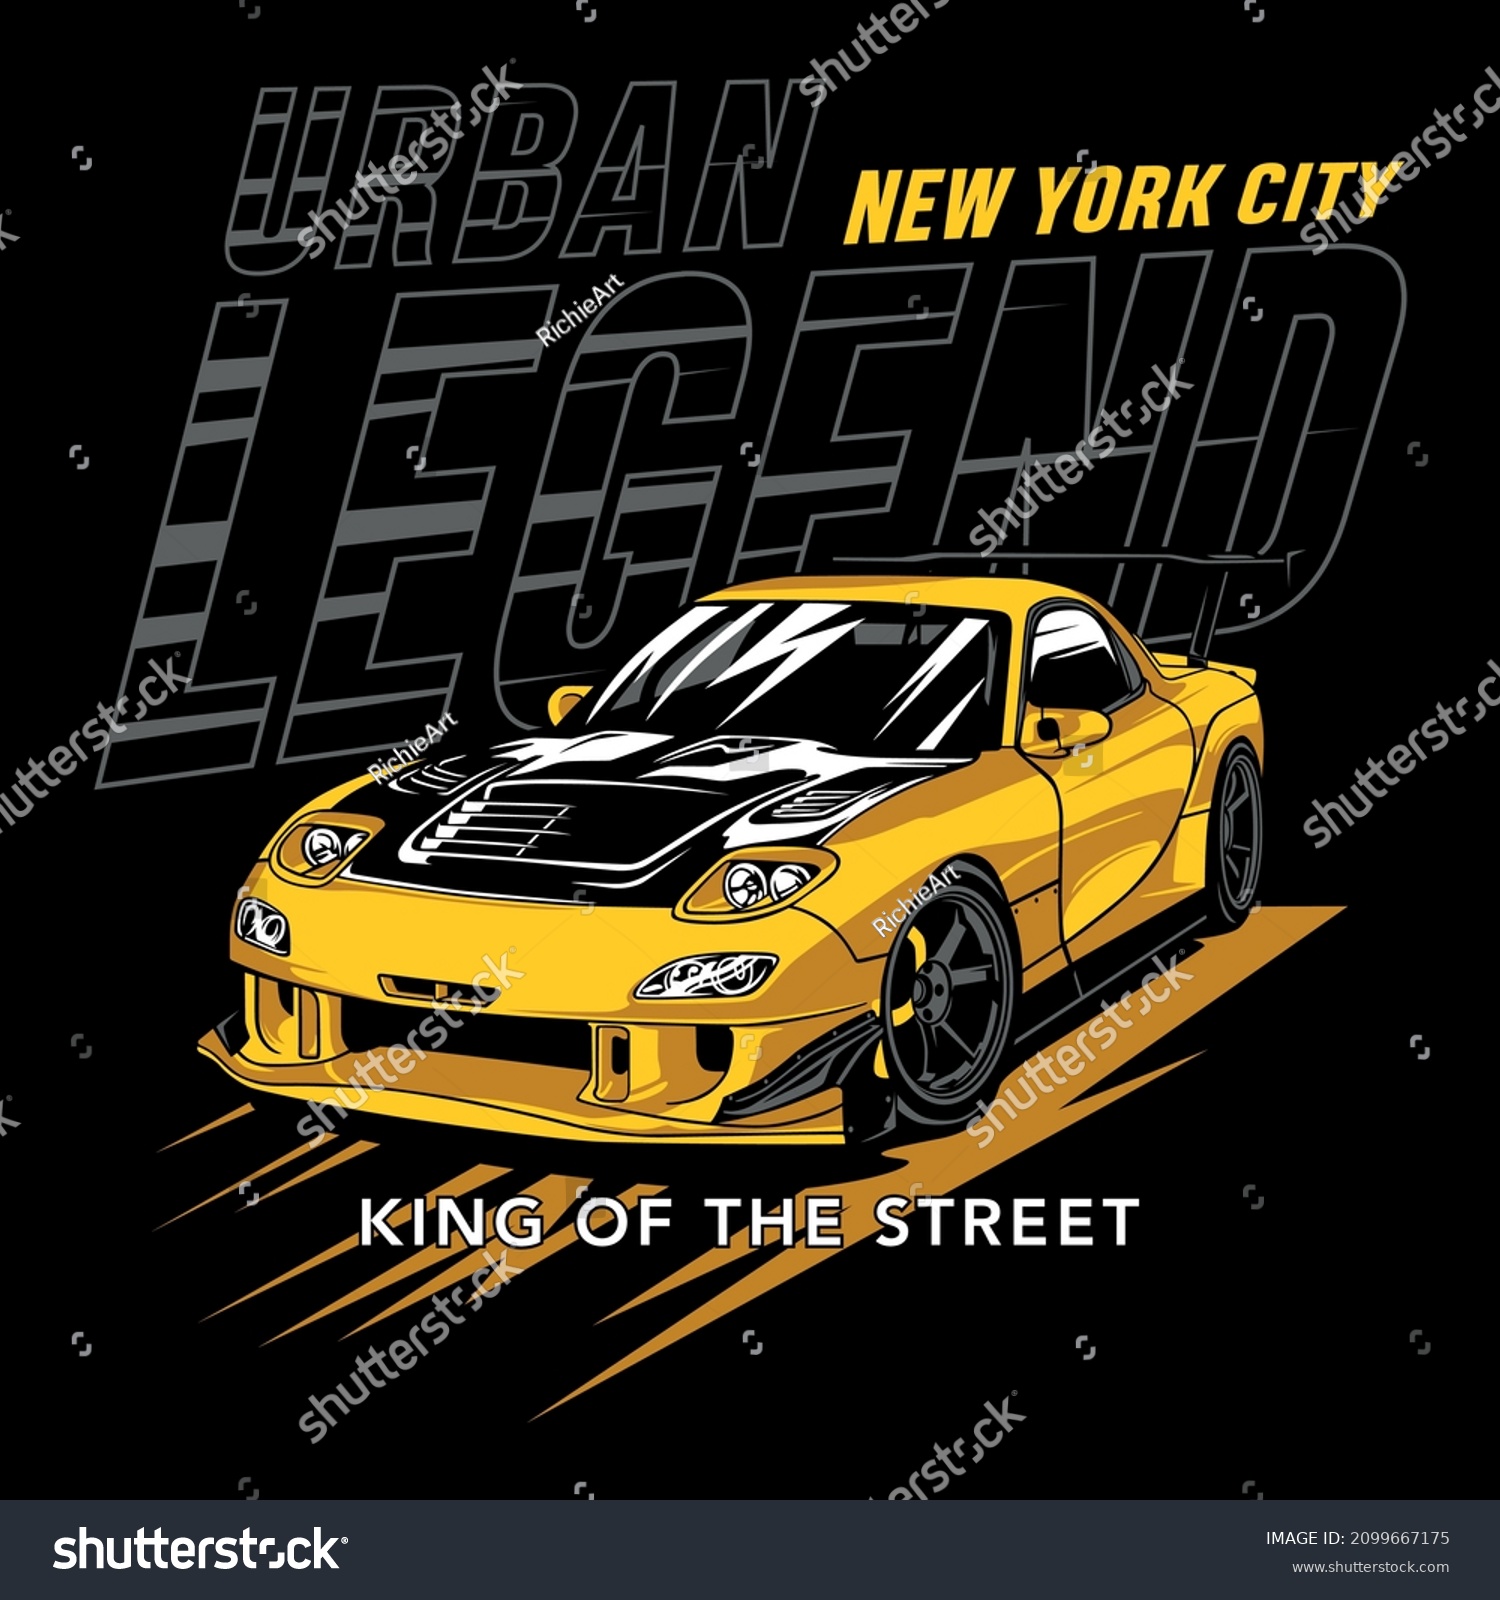 Race Car Legend, king of the street, car race drift car vector art print #2099667175